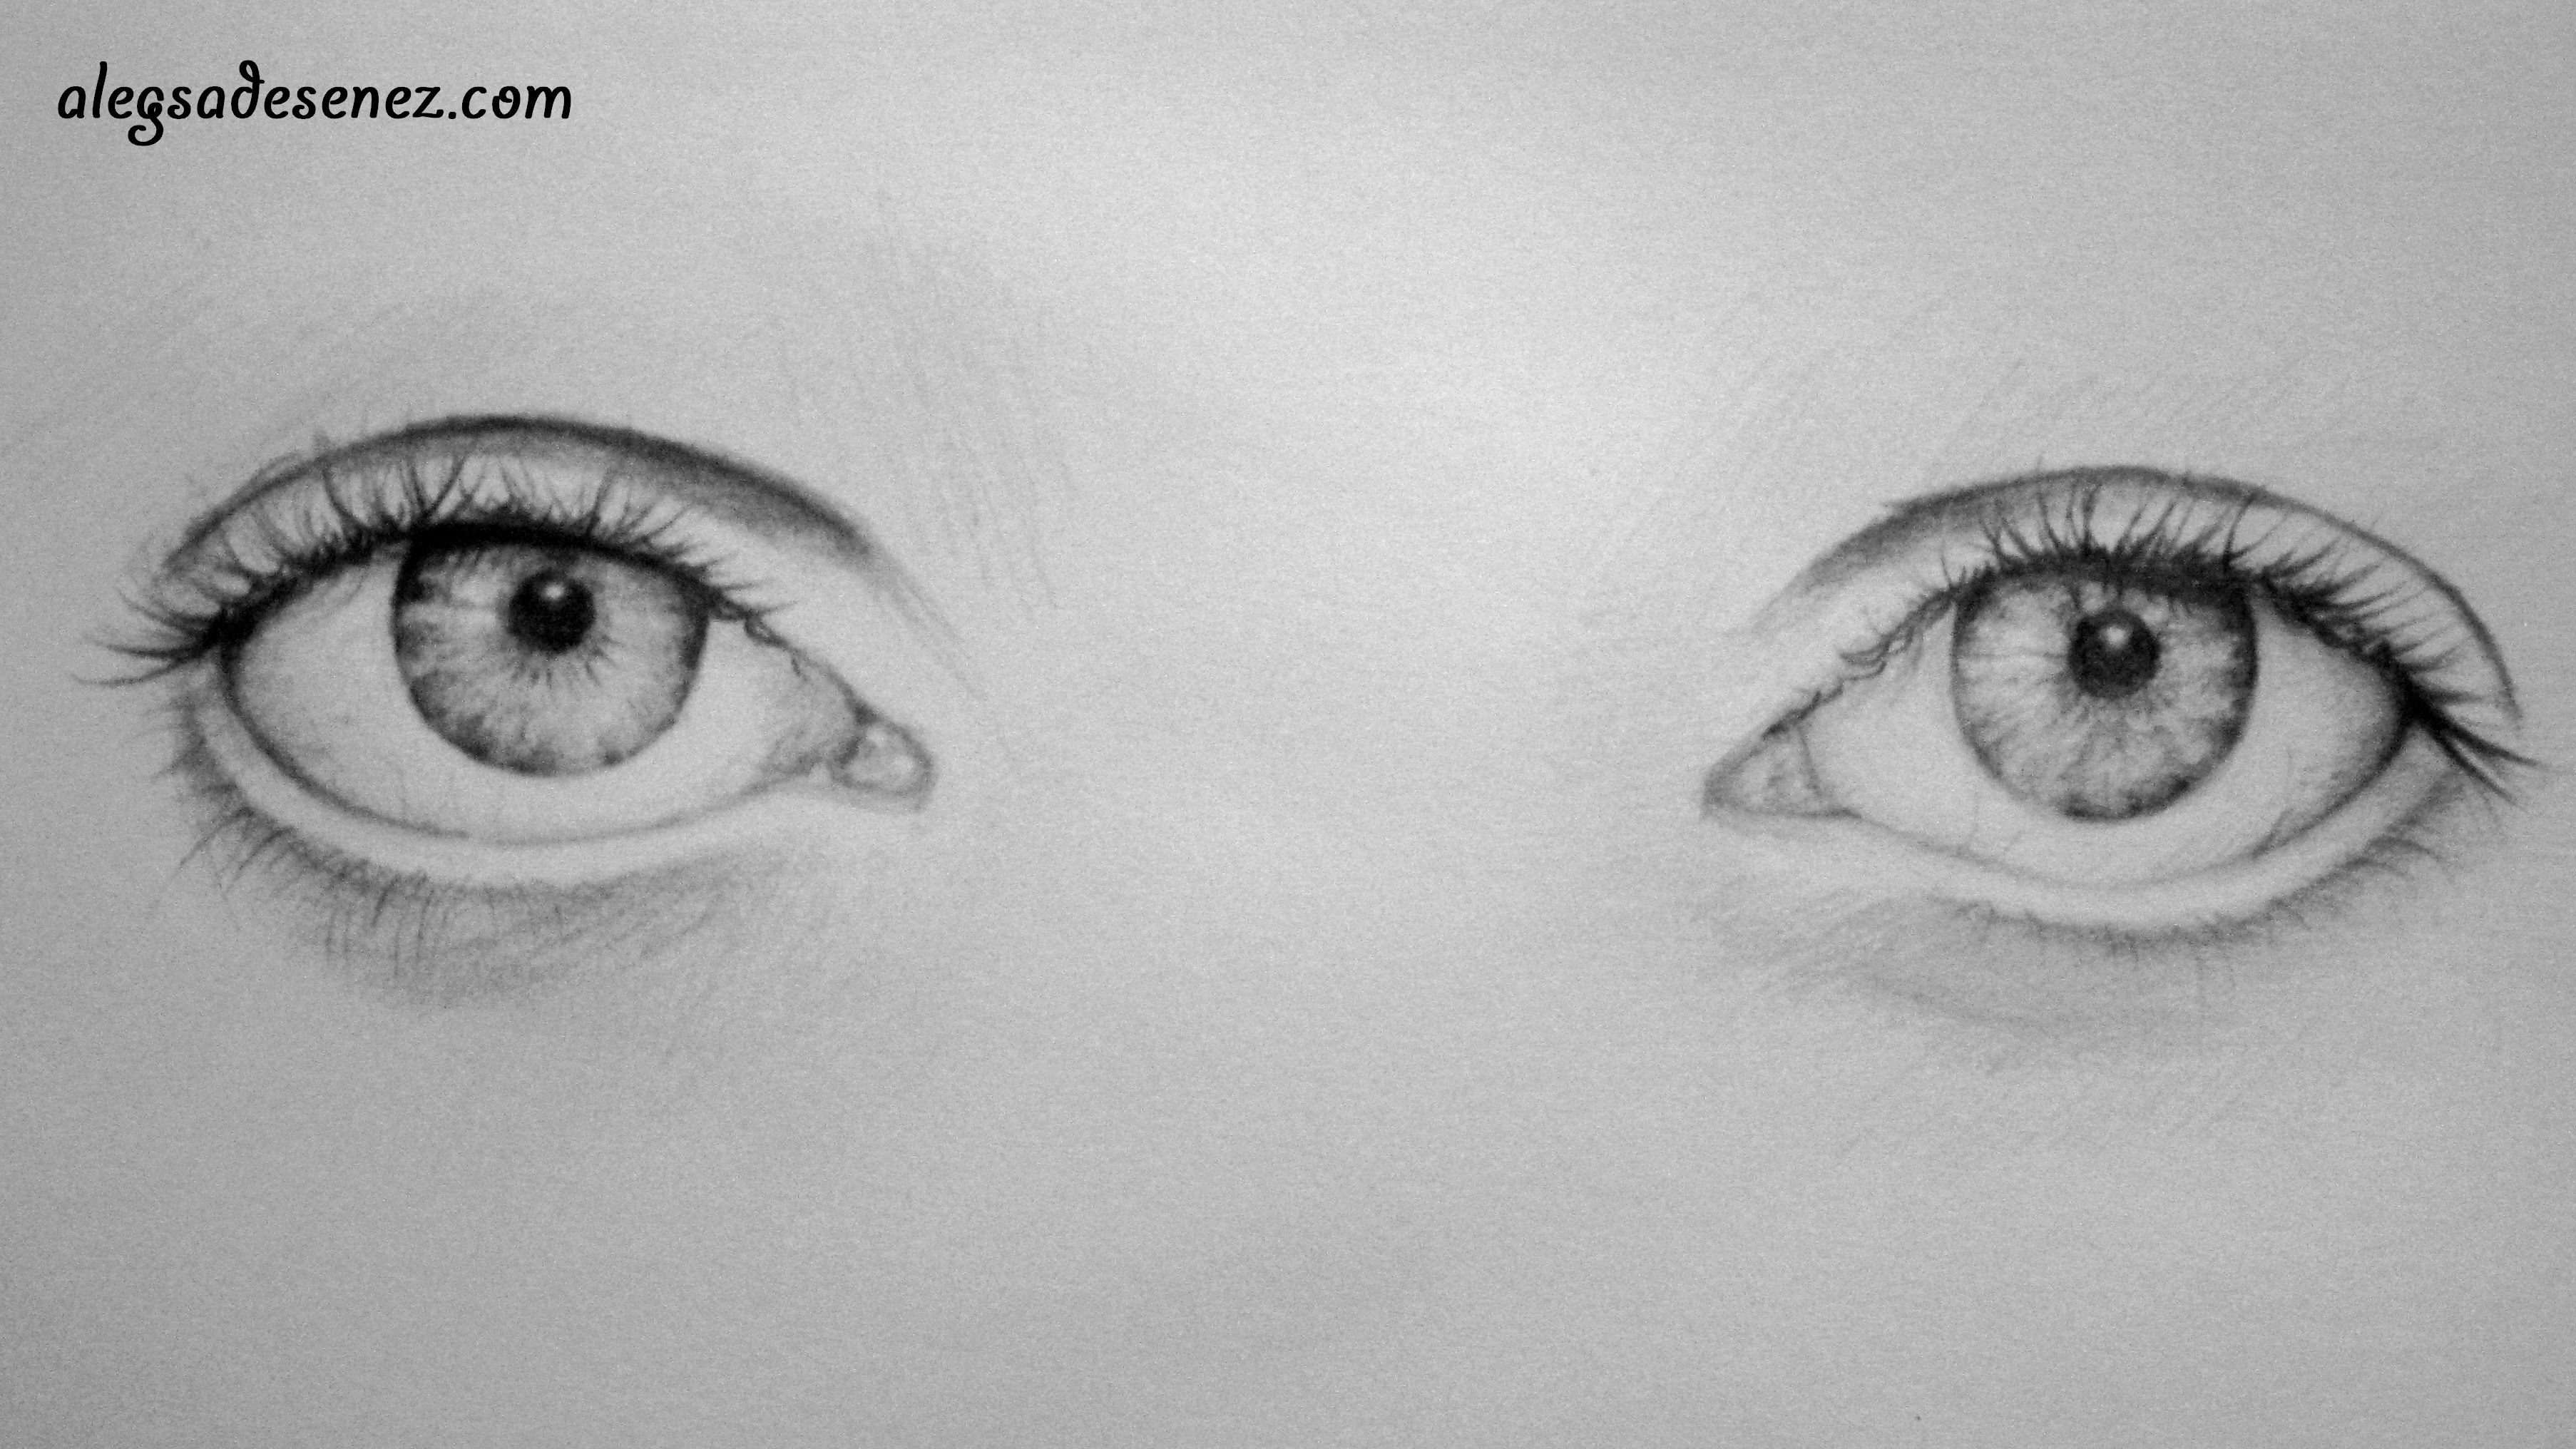 wrench Motivate on the other hand, Cum sa desenezi ochii in doar cateva linii sau realist – ALEG SA DESENEZ